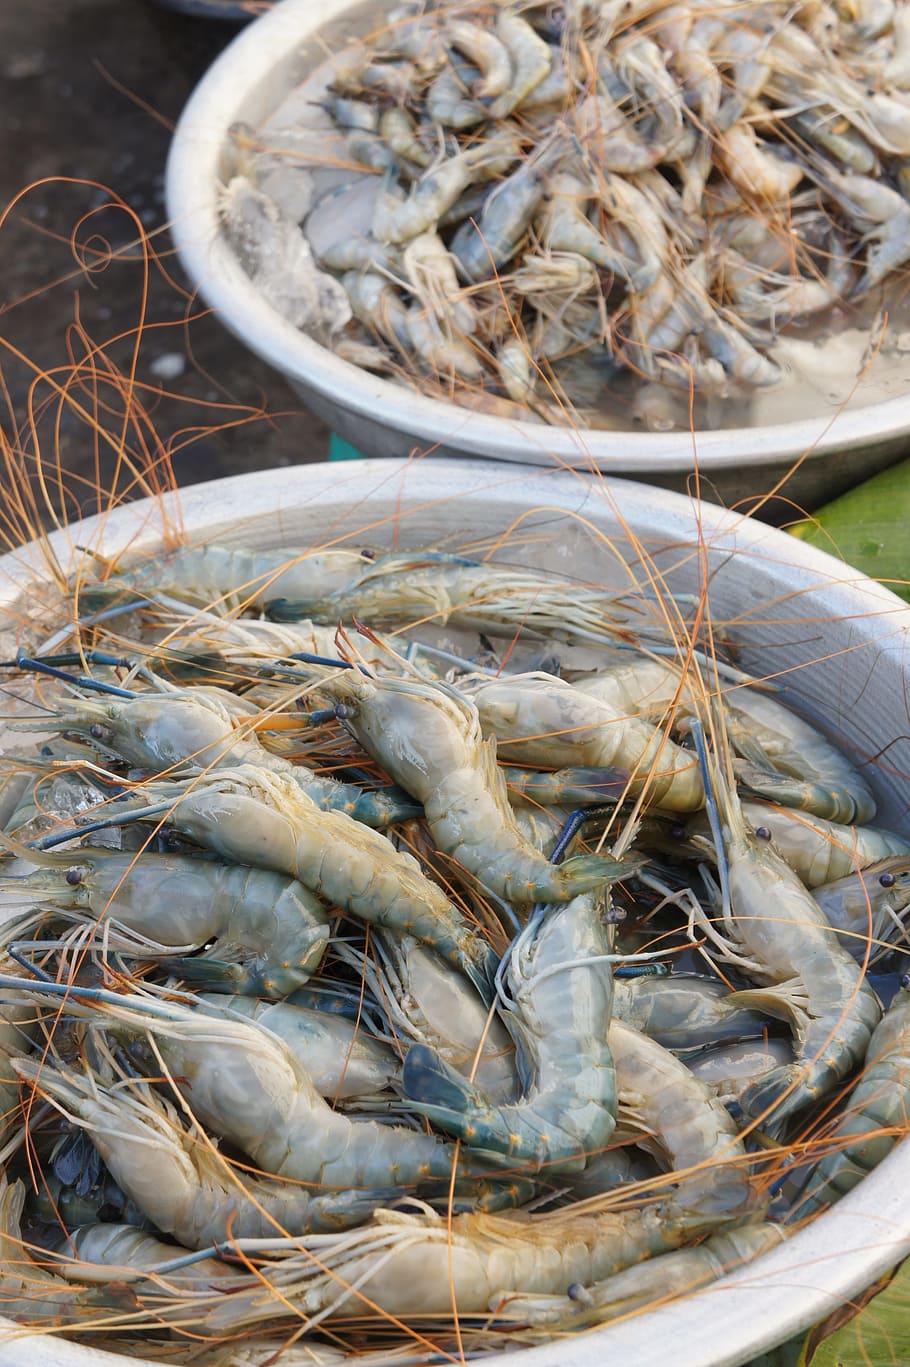 Crabs, Market, Meat, Food, Eat, fish market, farmers local market, sell, burma, myanmar